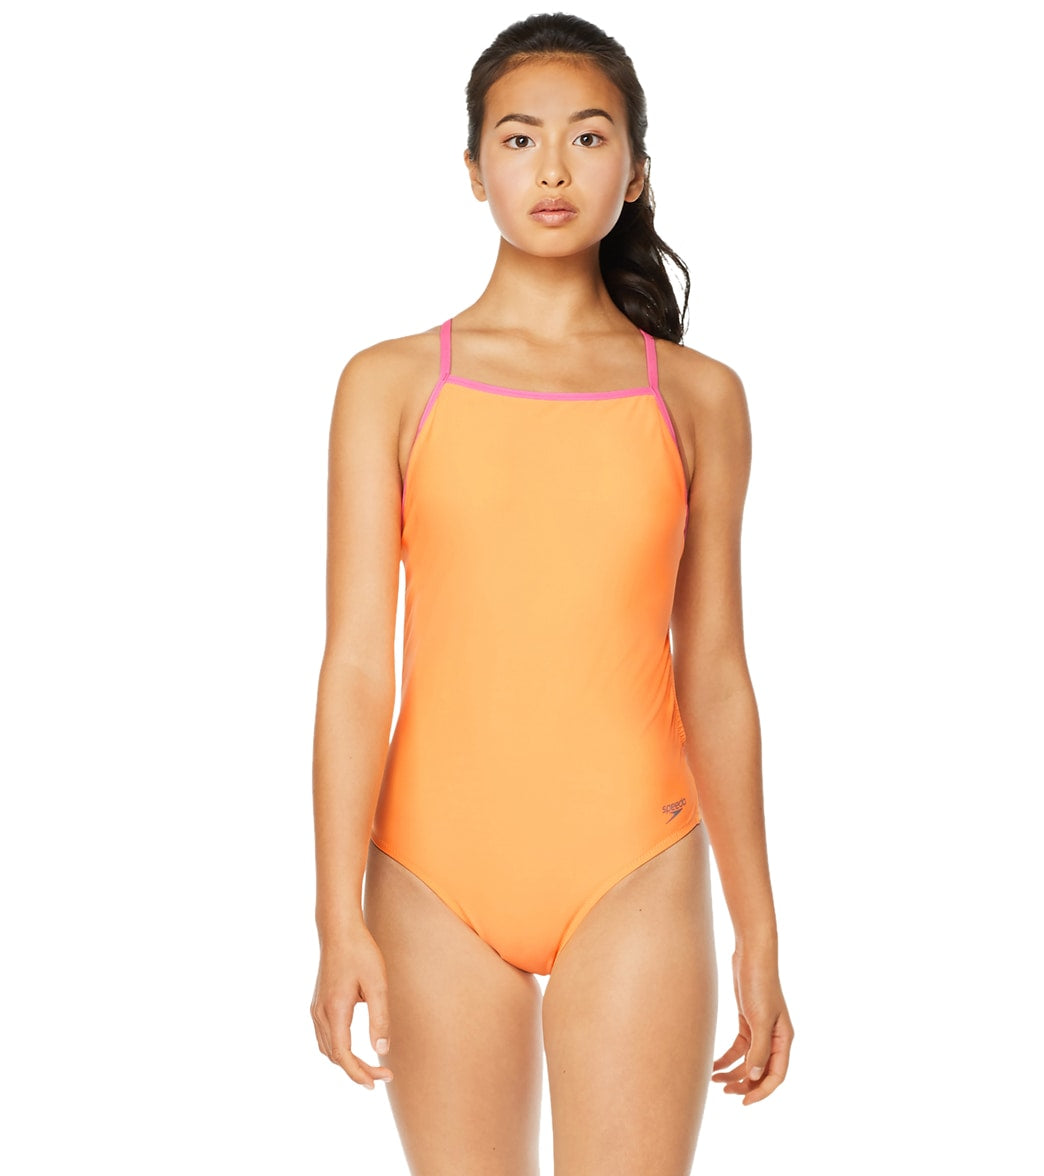 Speedo Women's Solid Flyer One Piece Swimsuit at